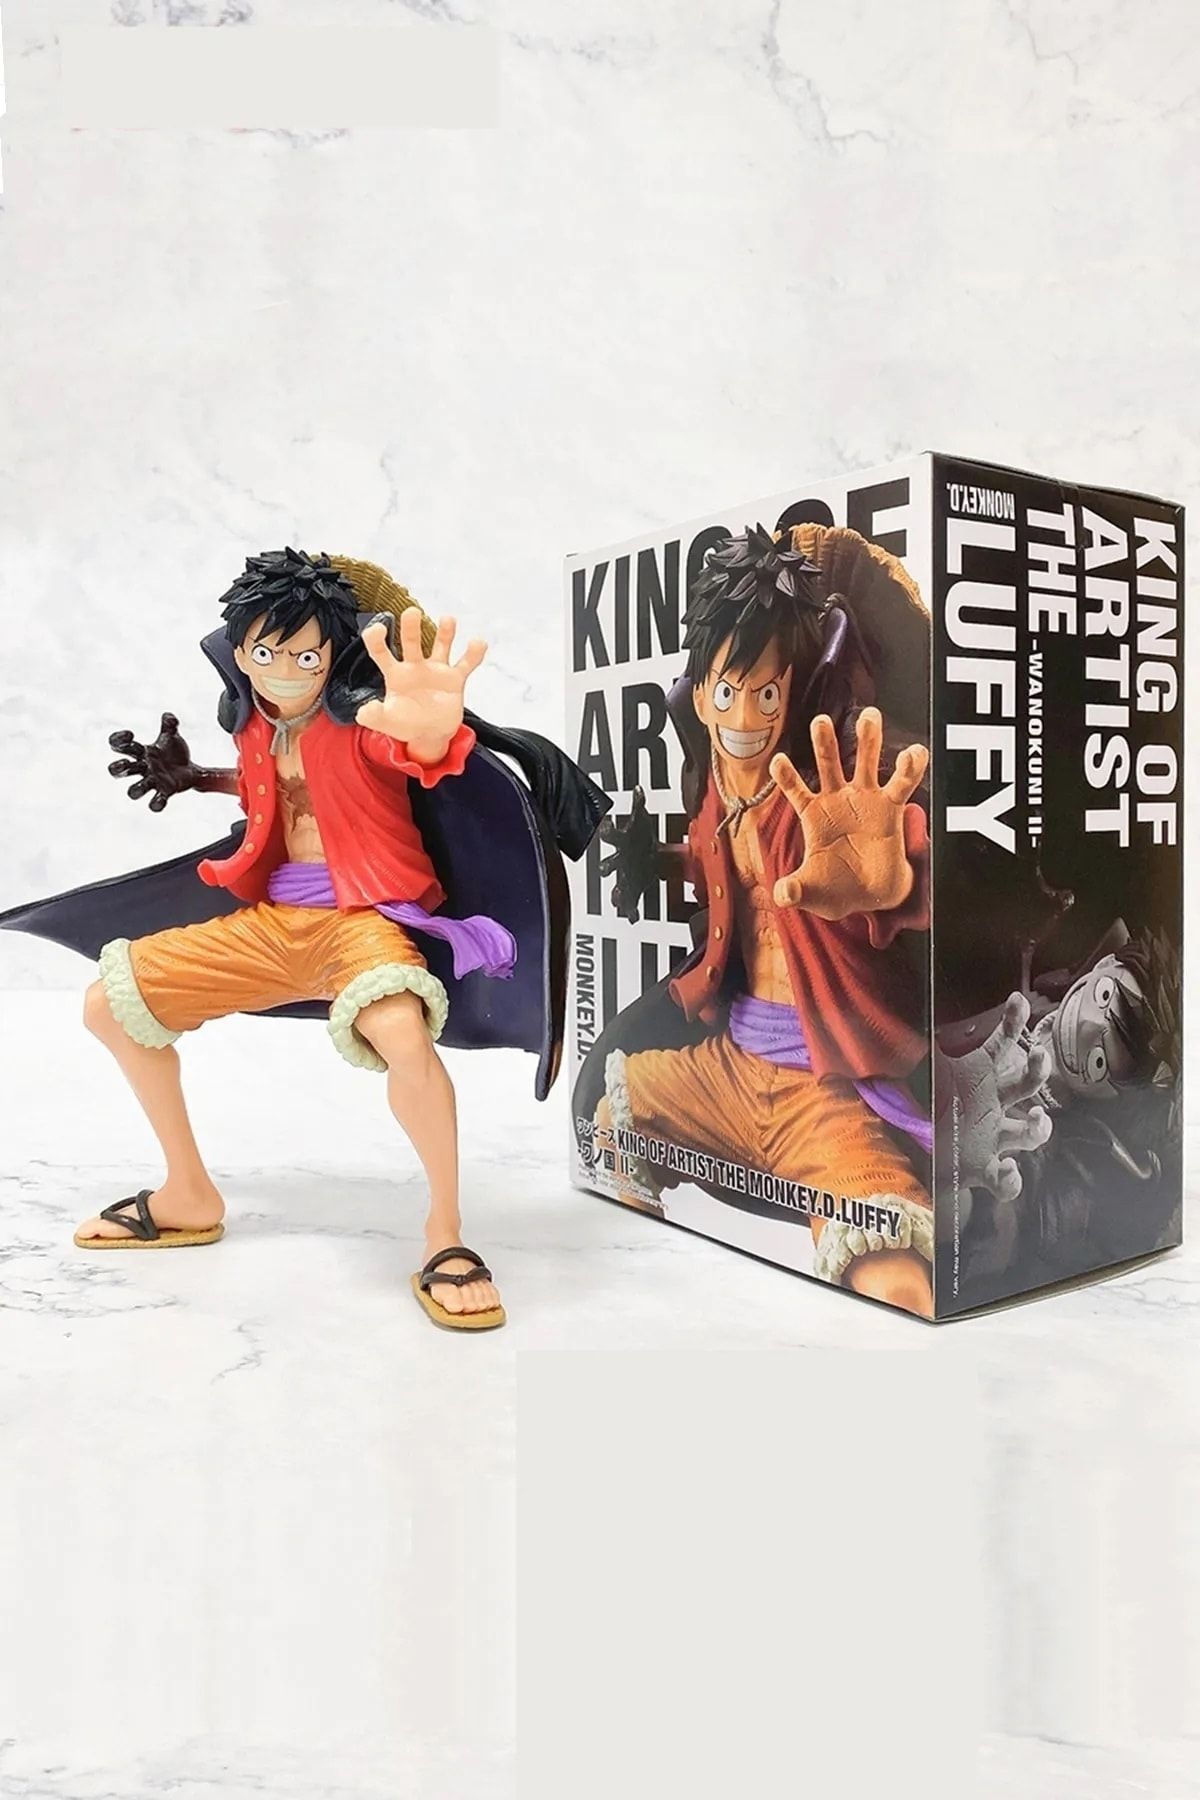 Figurine One Piece- ONE PIECE - Luffy - Figurine King Of Artist 20cm